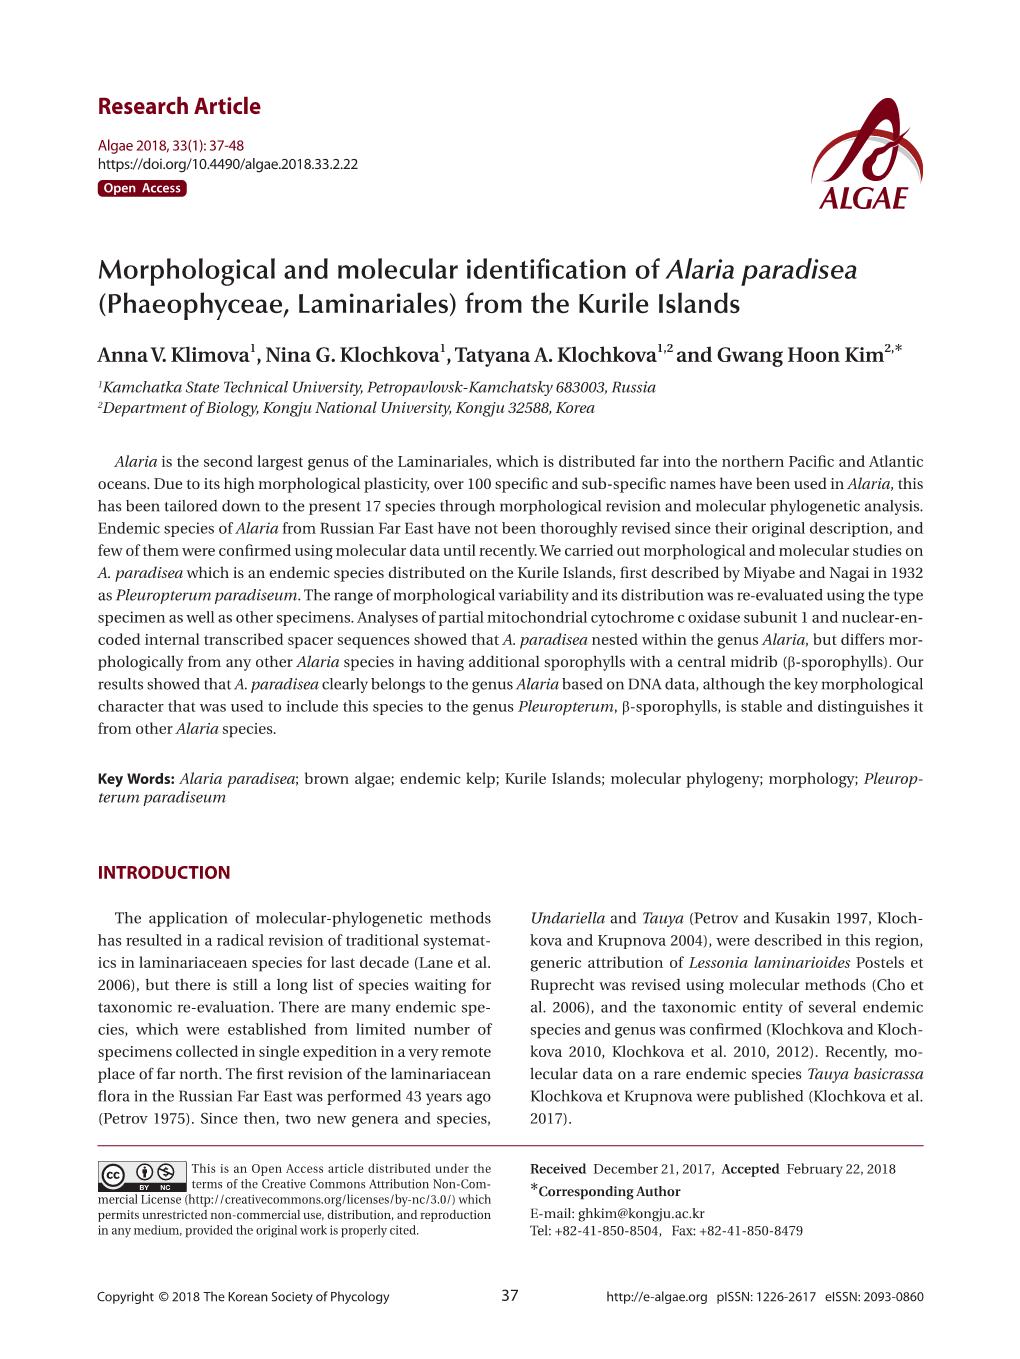 Morphological and Molecular Identification of Alaria Paradisea